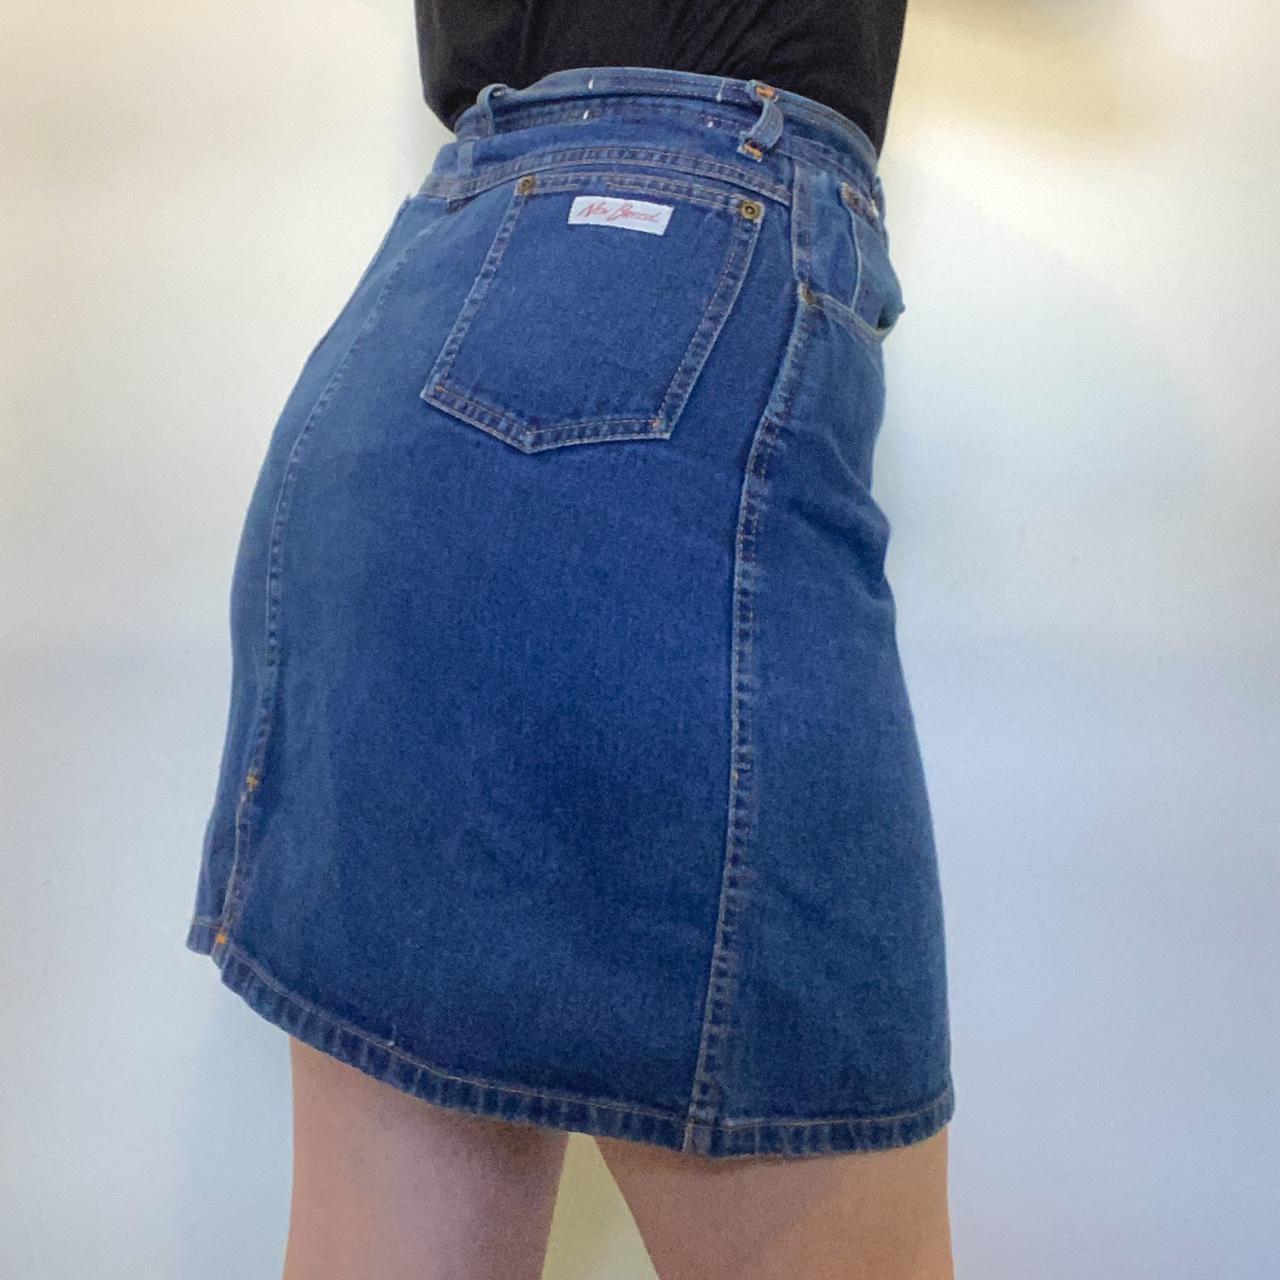 Product Image 2 - 💙 vintage denim skirt 💙

Brand